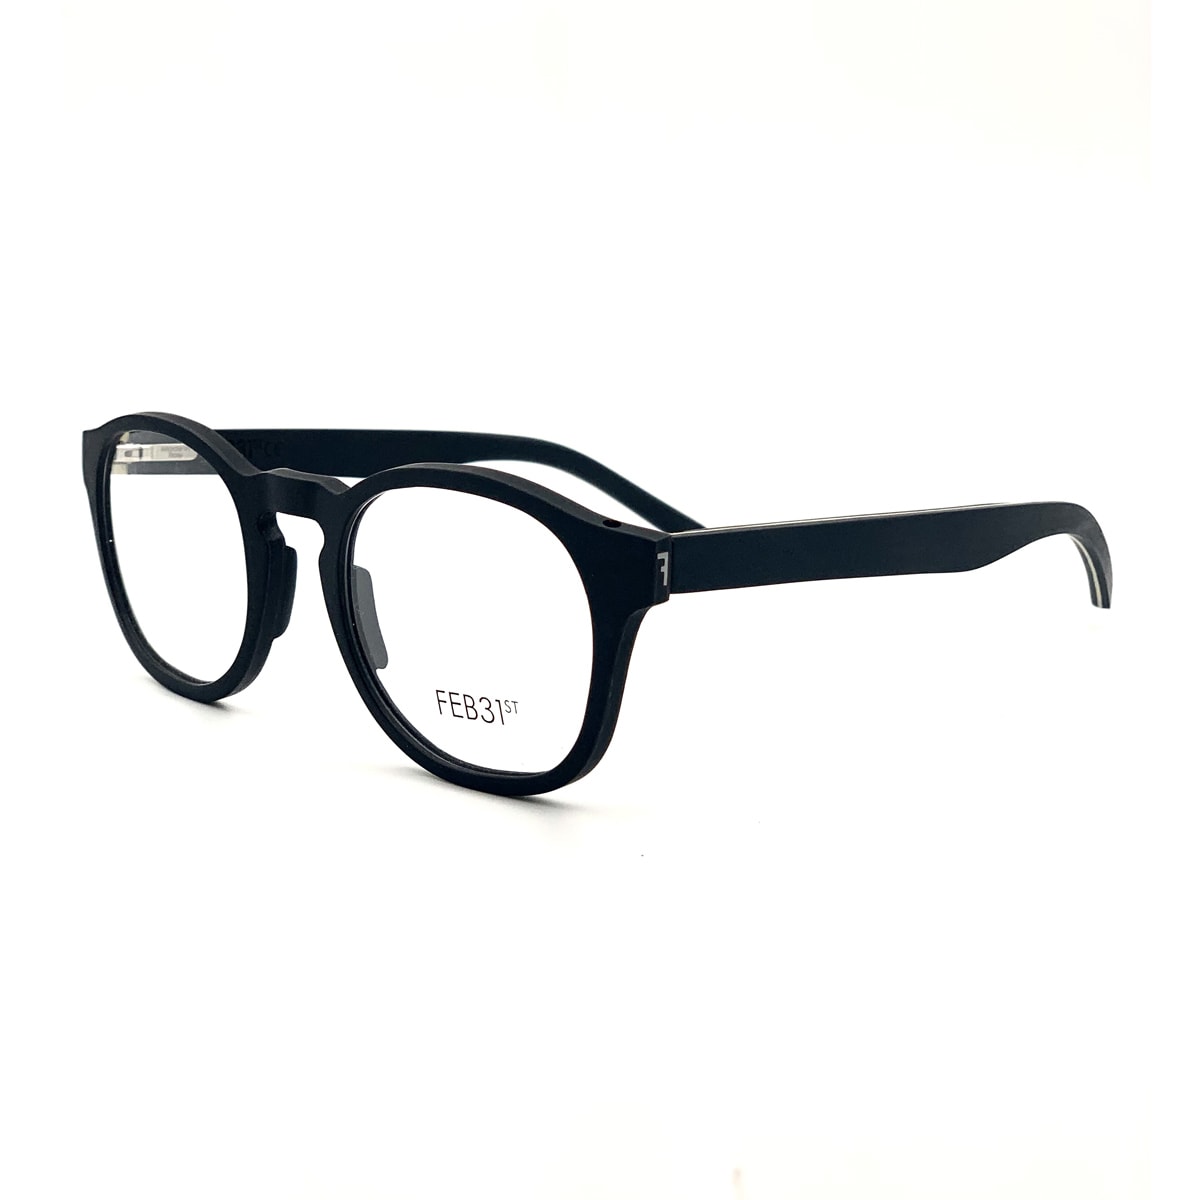 Feb31st Pavo Black Glasses